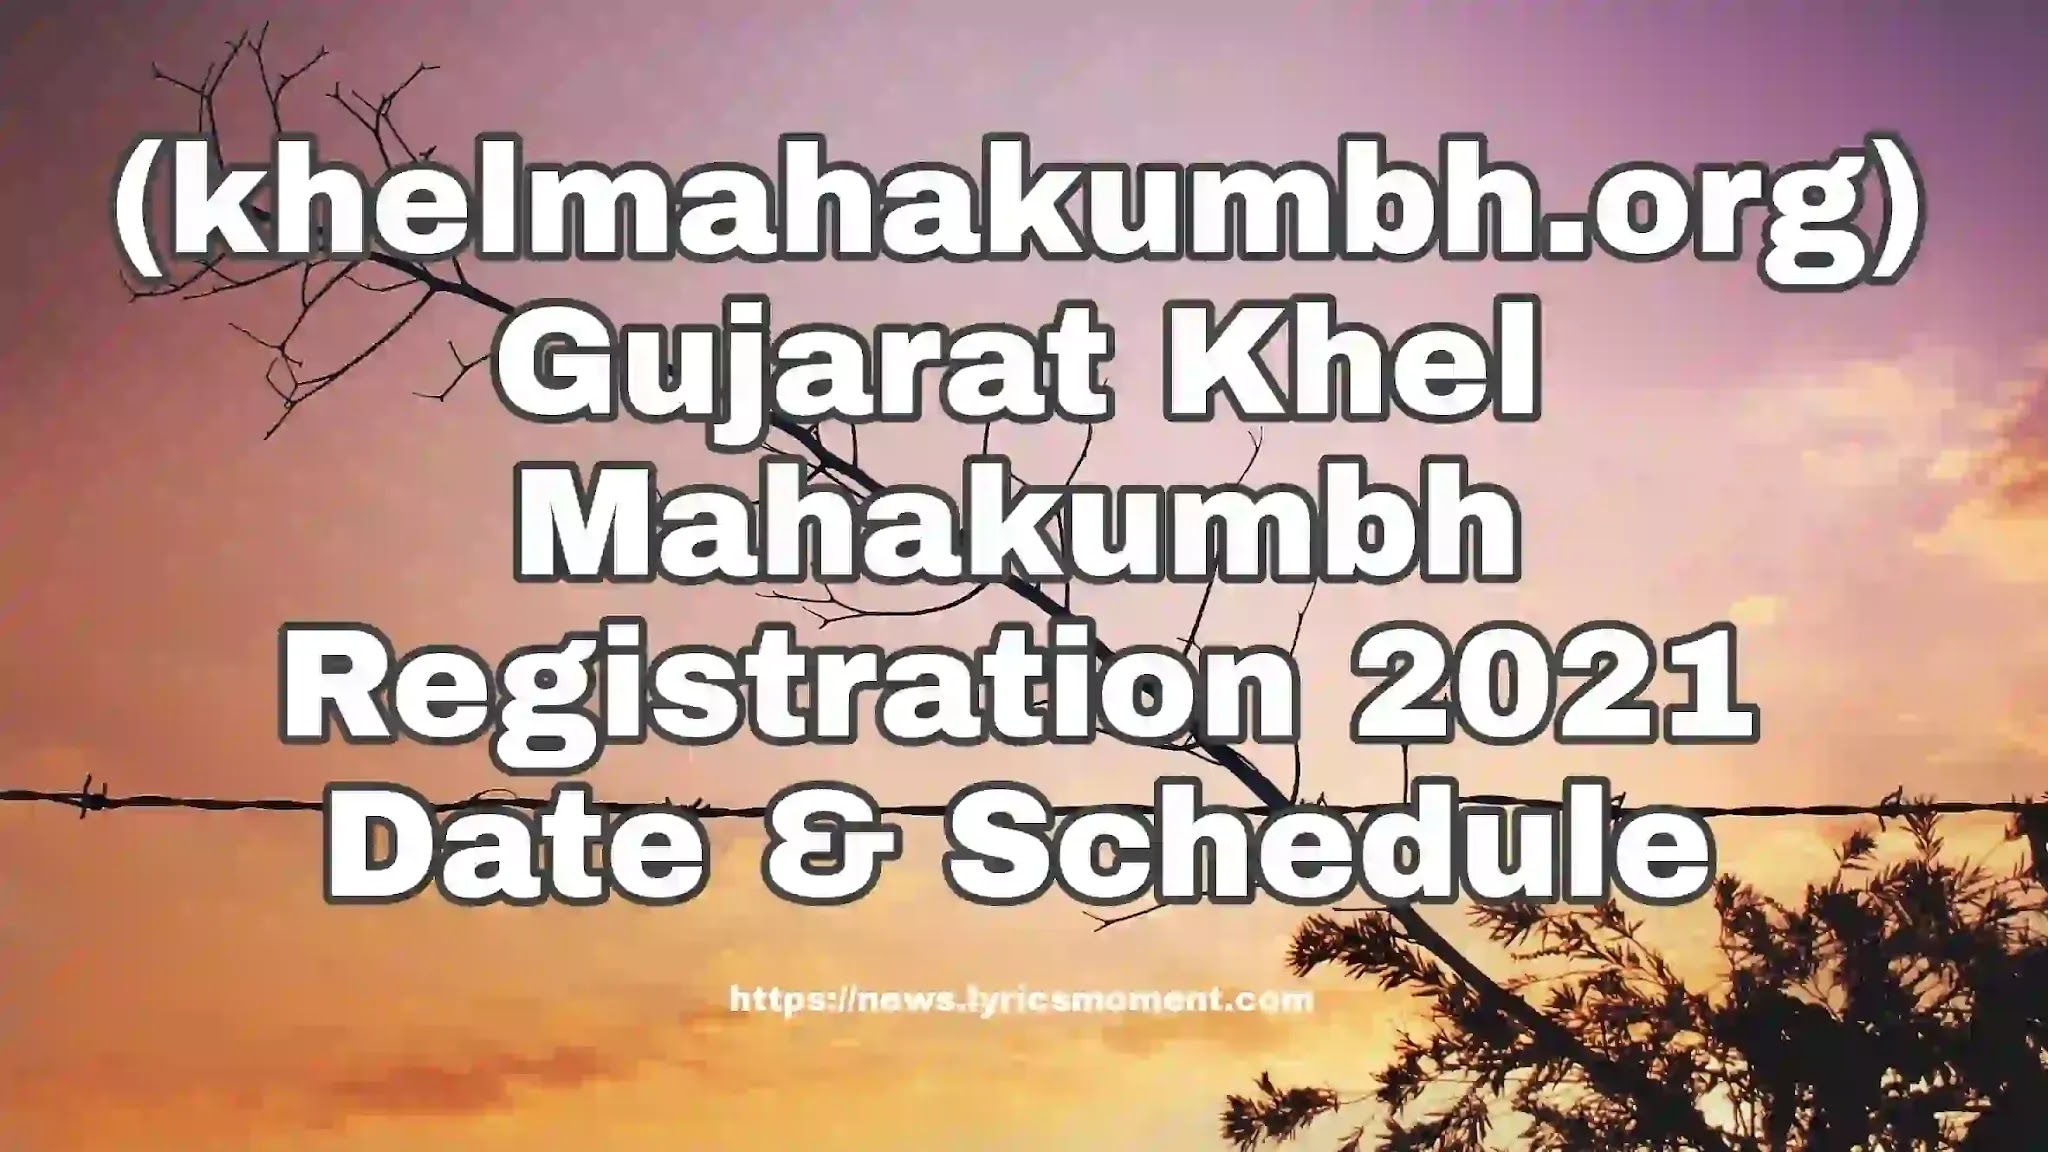 (khelmahakumbh.org) Gujarat Khel Mahakumbh Registration 2021 Date & Schedule